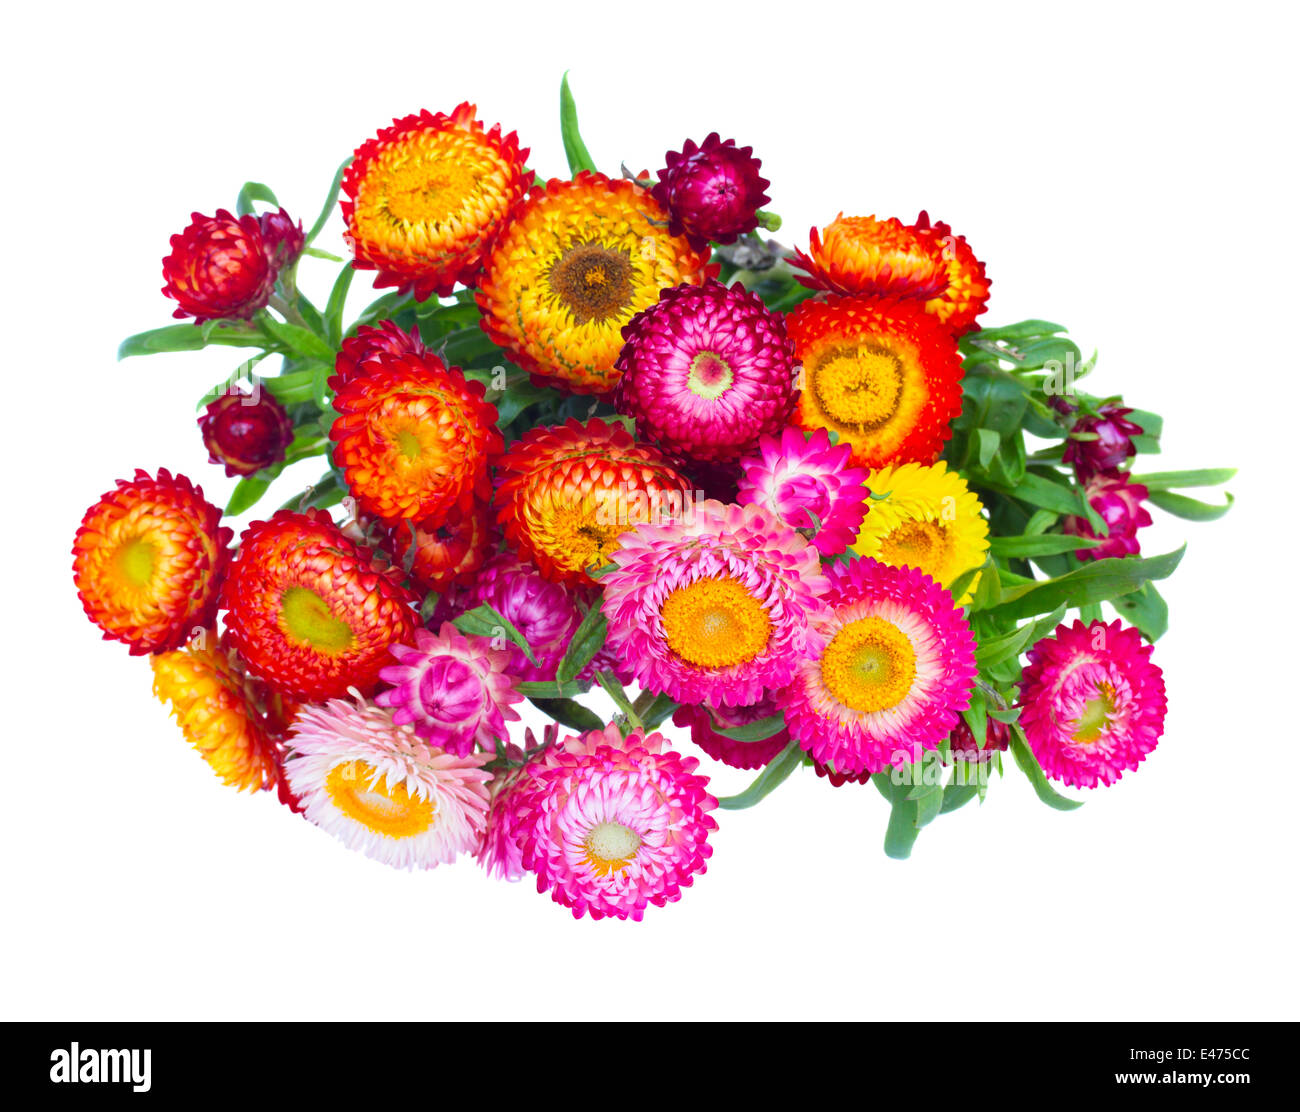 Bouquet of Everlasting flowers Stock Photo